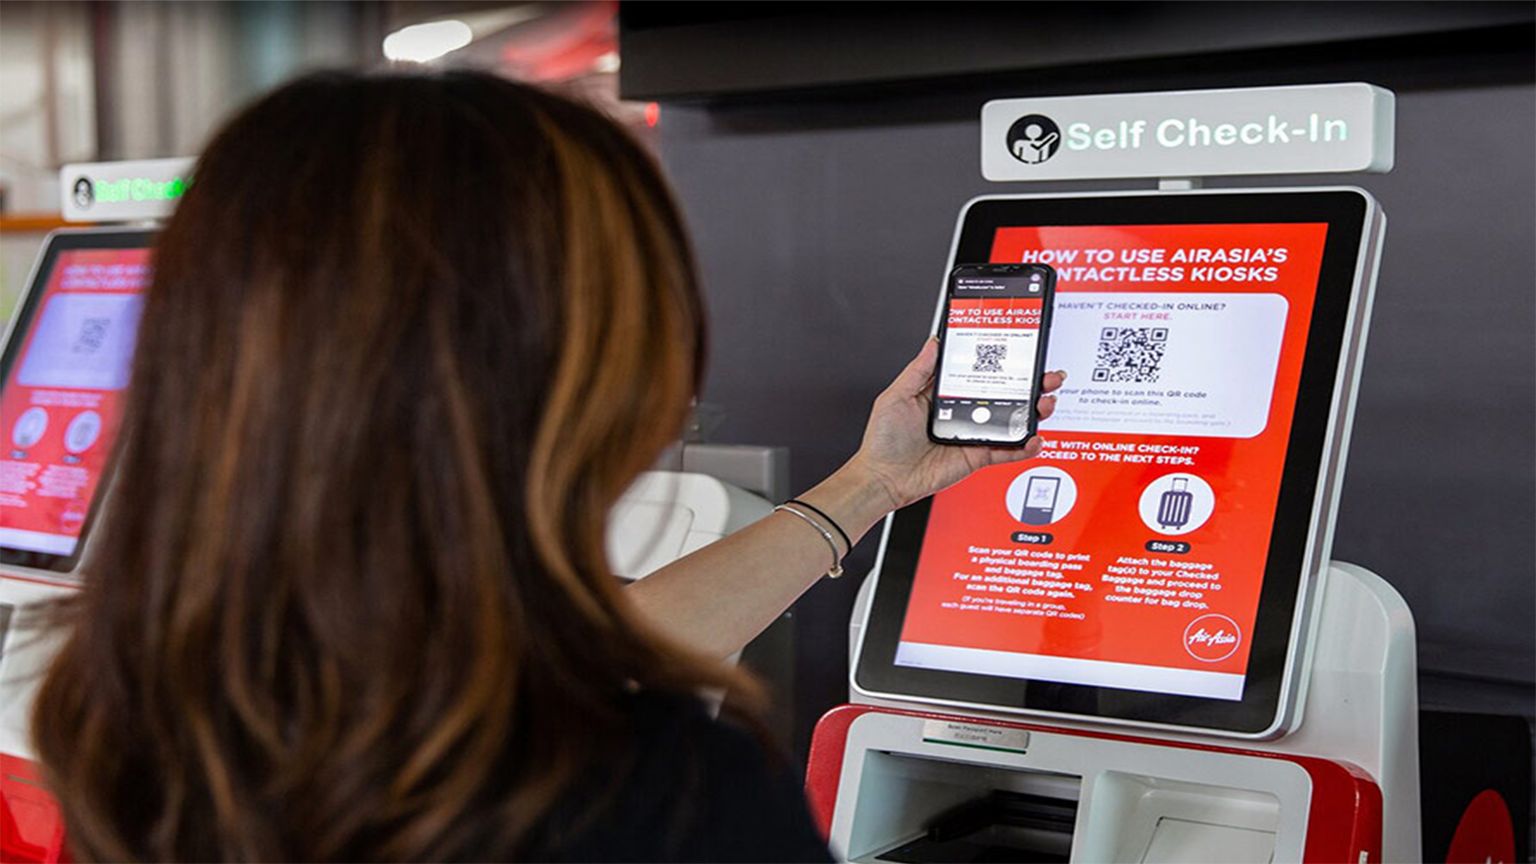 62 percent of passengers want contactless transactions - AirAsia PH survey photo Airasia